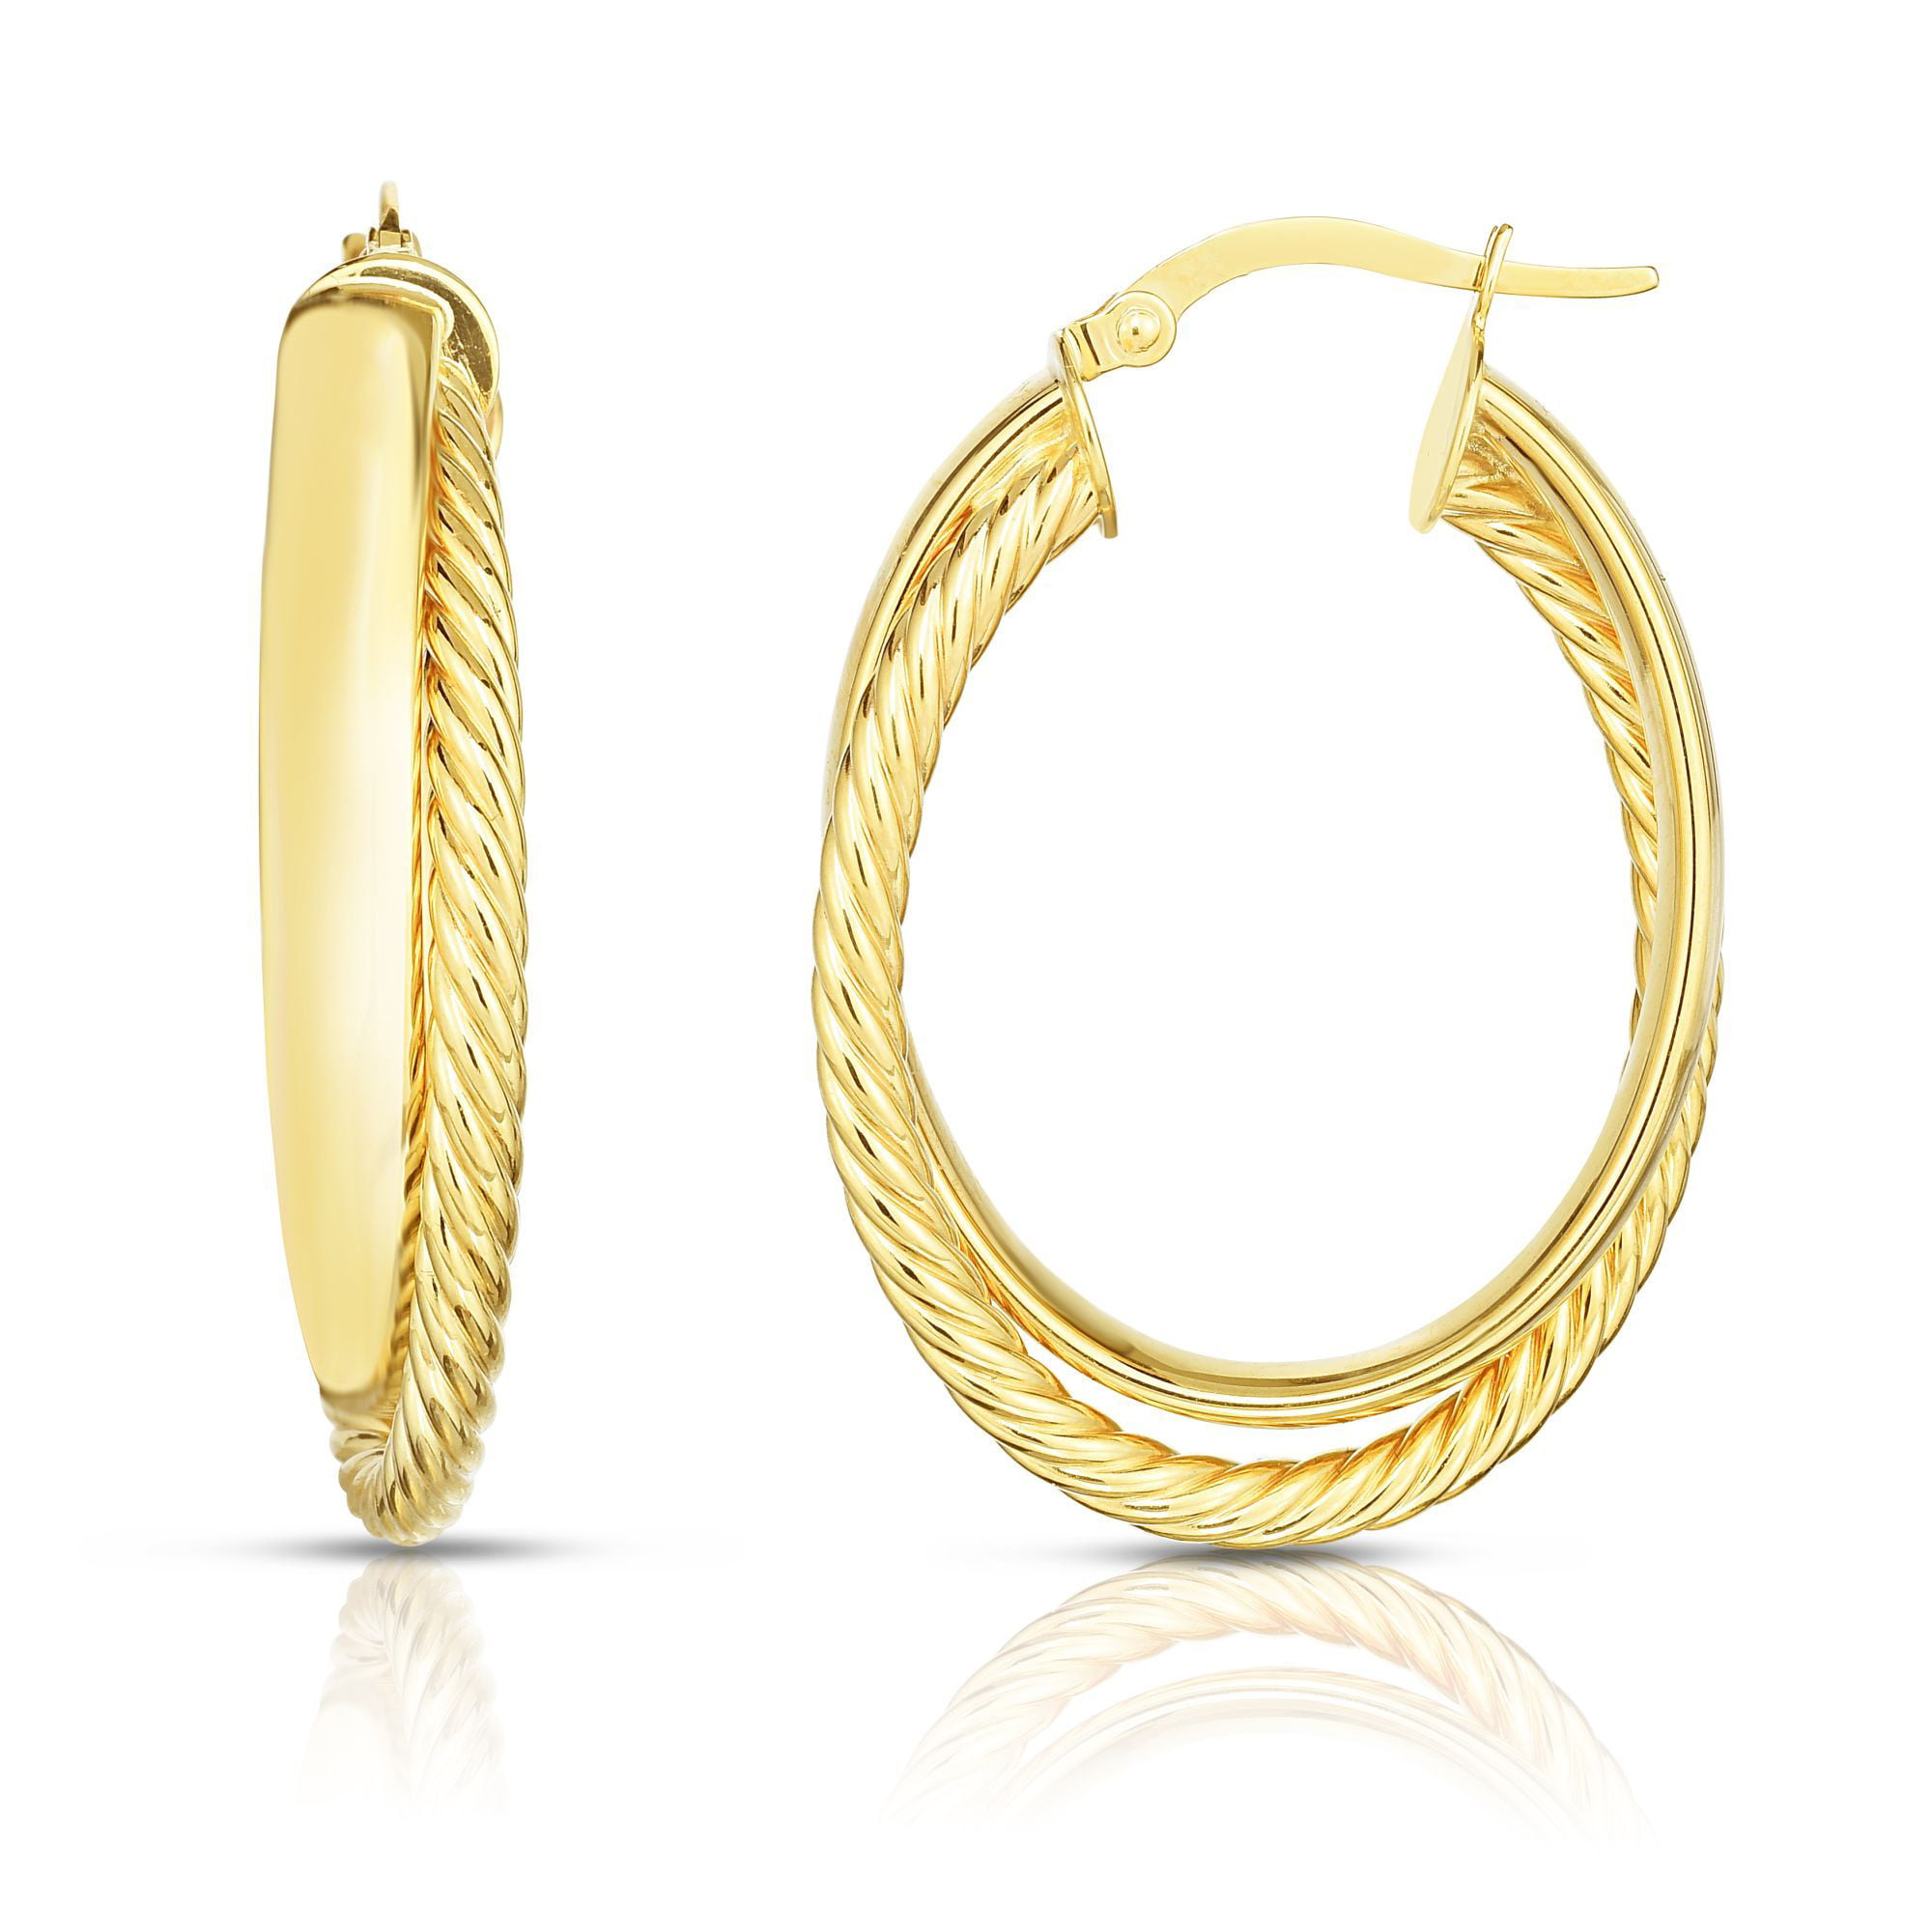 Next Level Jewelry - 14K Yellow Gold Multi-Row Hoop Earrings, Spiral